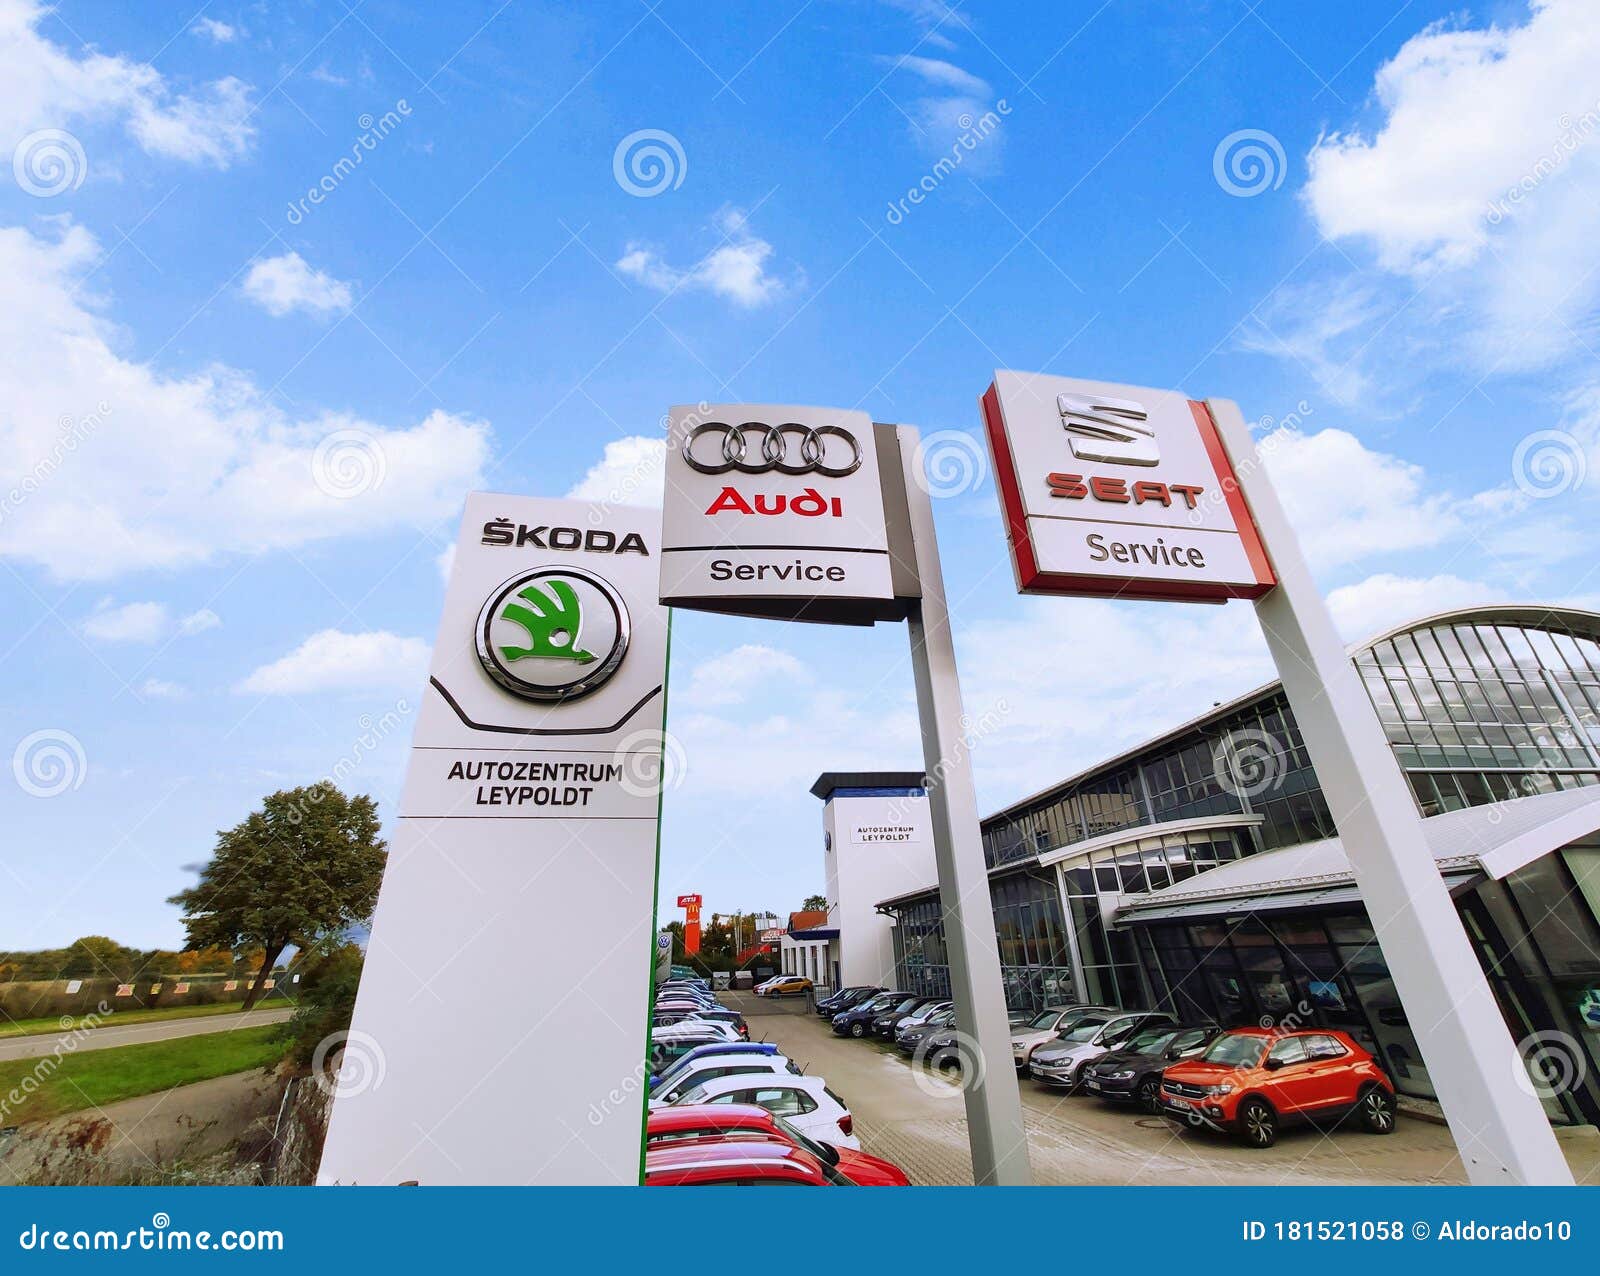 Volkswagen VW Group Audi, Skoda, Seat Car Dealer/ Worksop